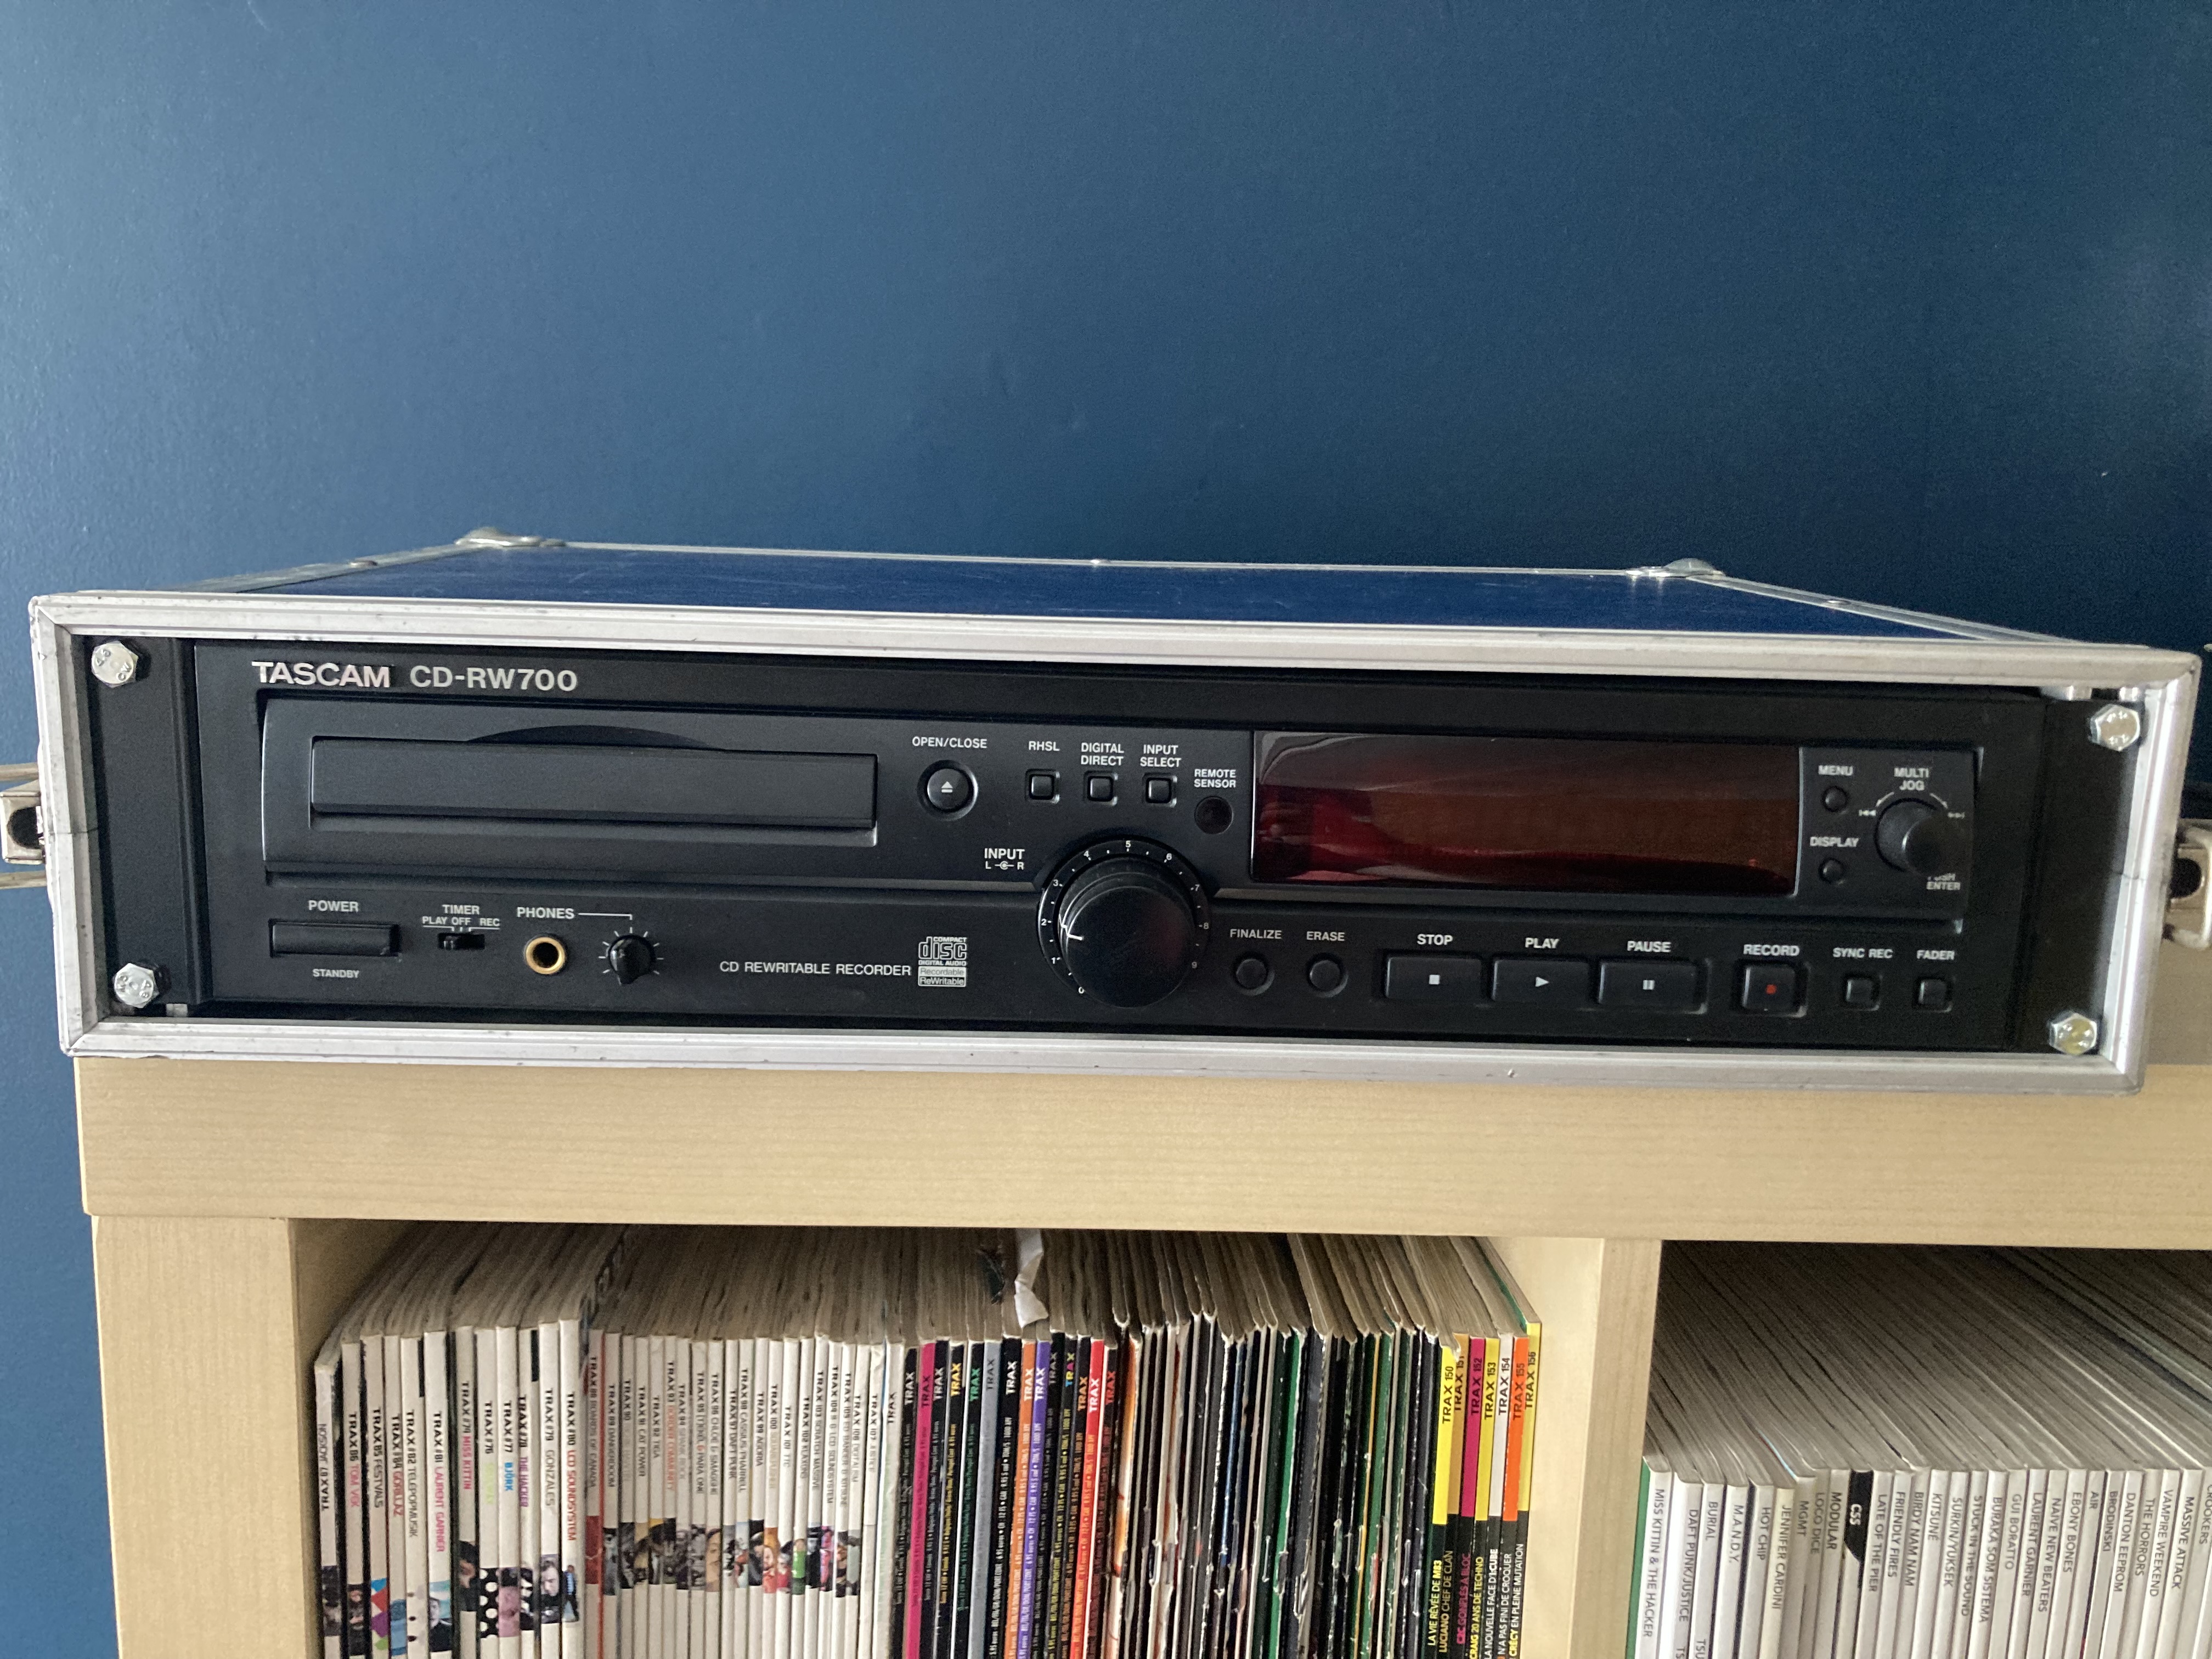 CD-RW700 - Tascam CD-RW700 - Audiofanzine